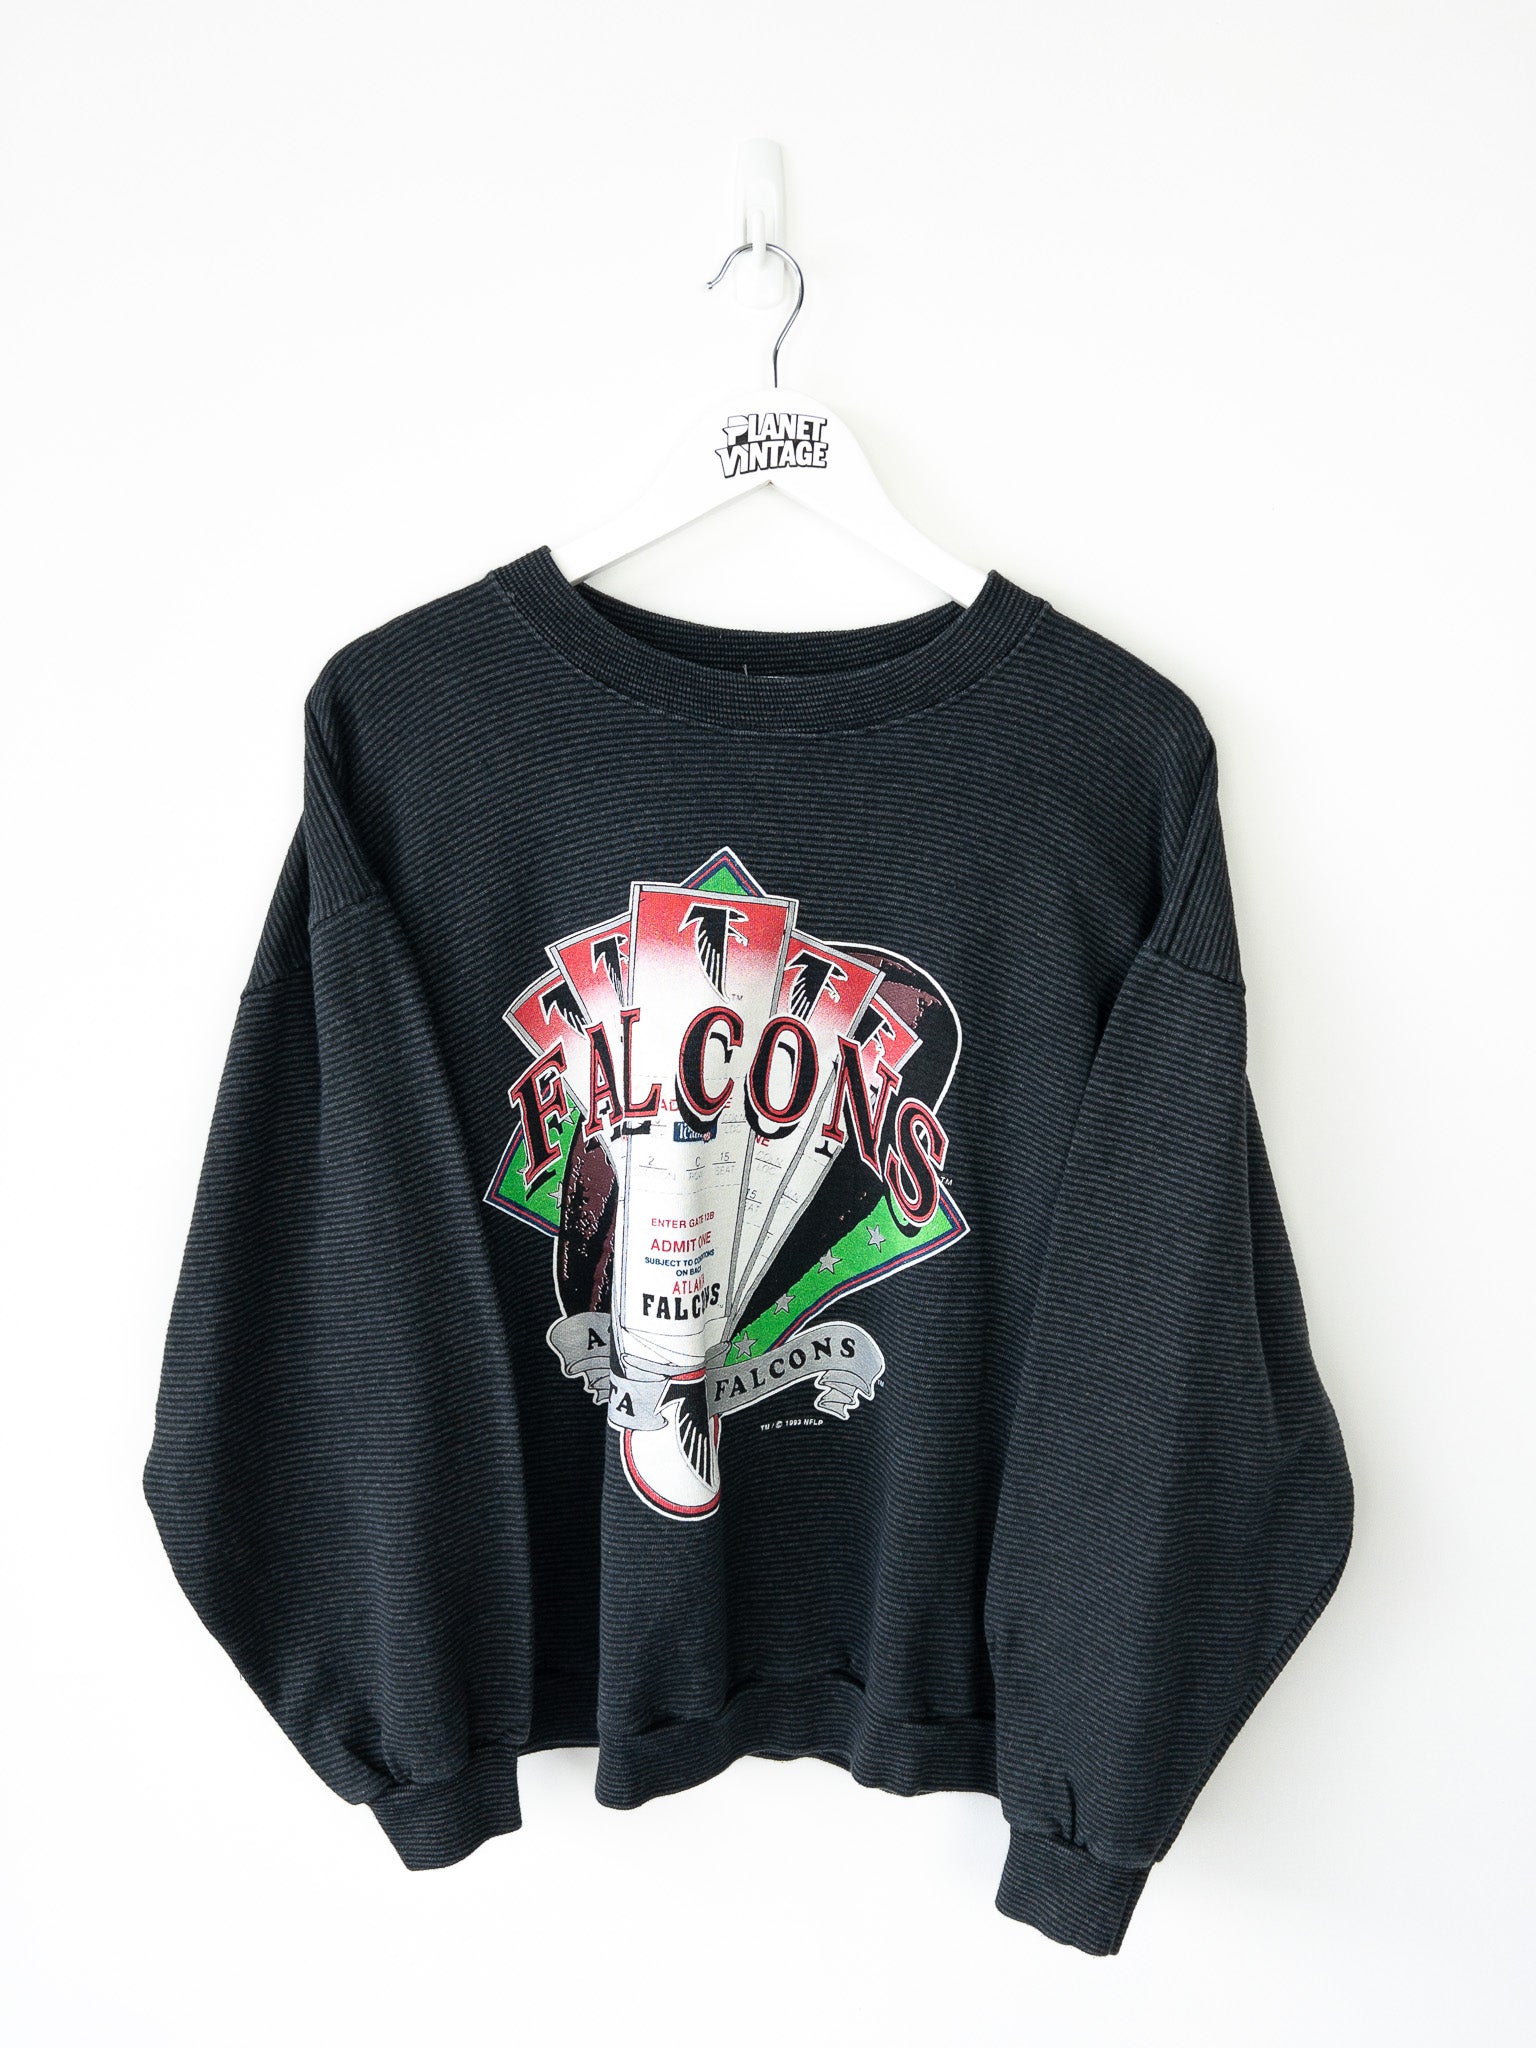 Vintage Atlanta Falcons 1993 Sweatshirt (L)